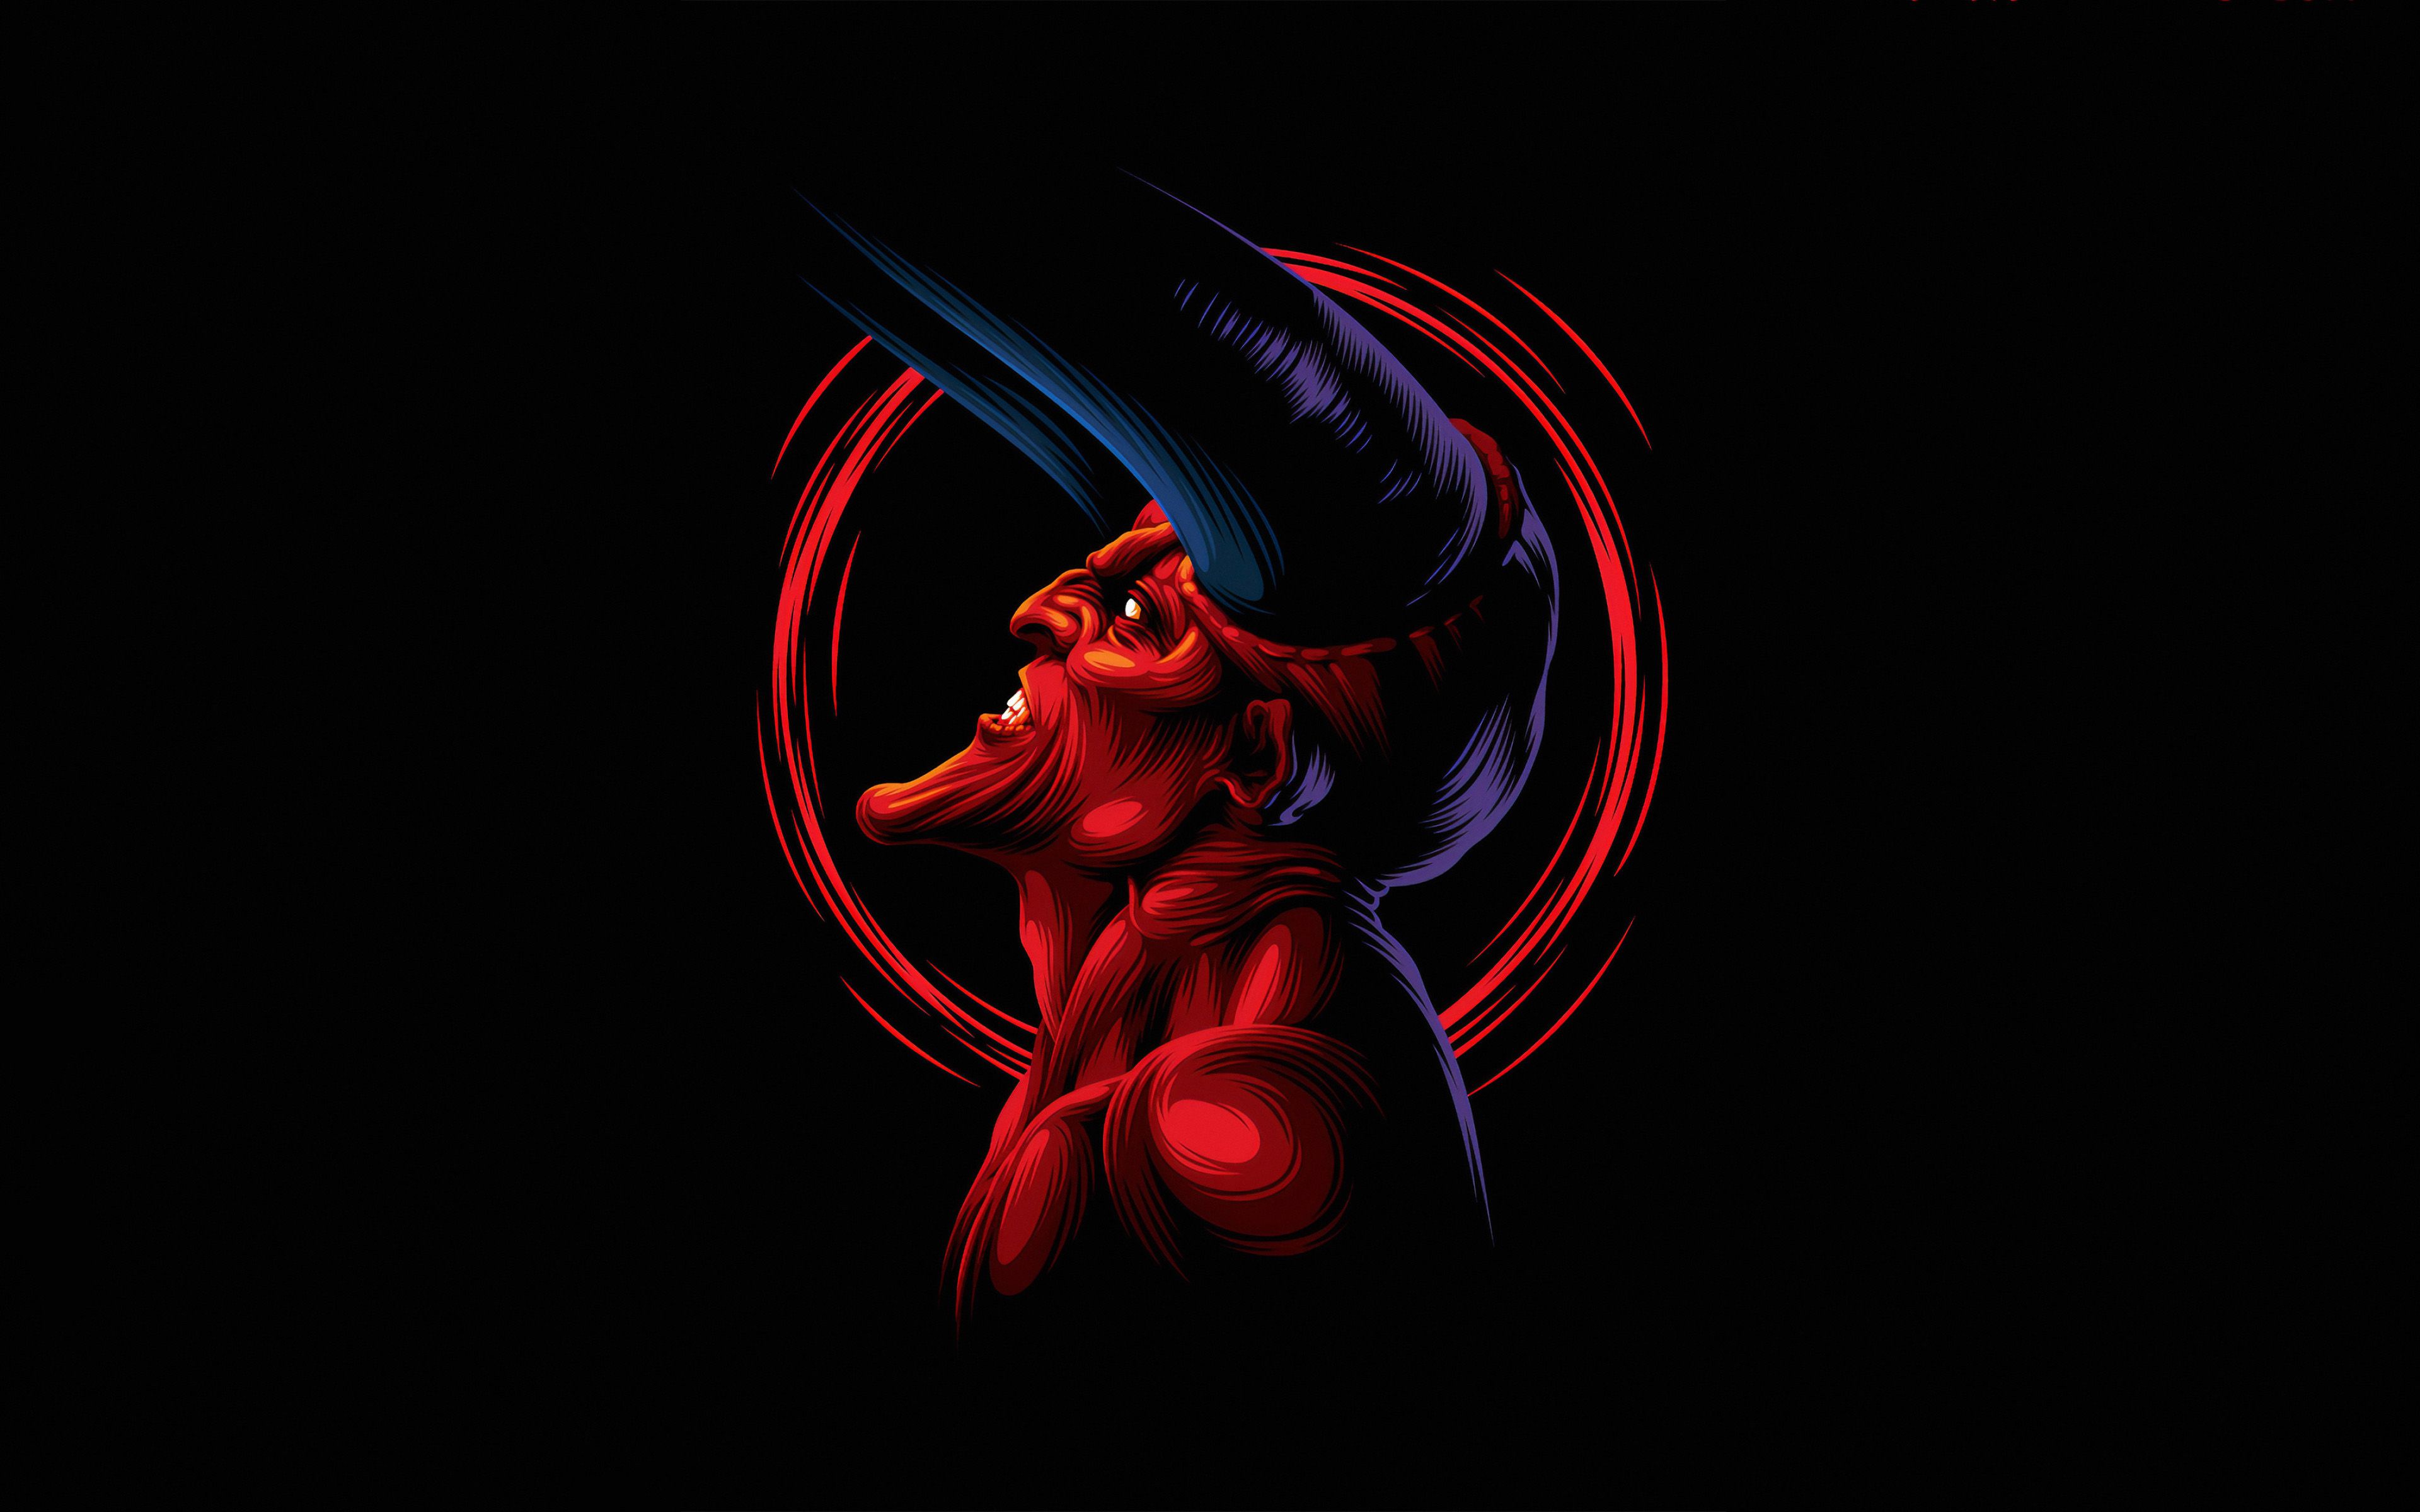 Download wallpaper red devil, 4k, minimal, monster, black background, devil, demon for desktop with resolution 3840x2400. High Quality HD picture wallpaper